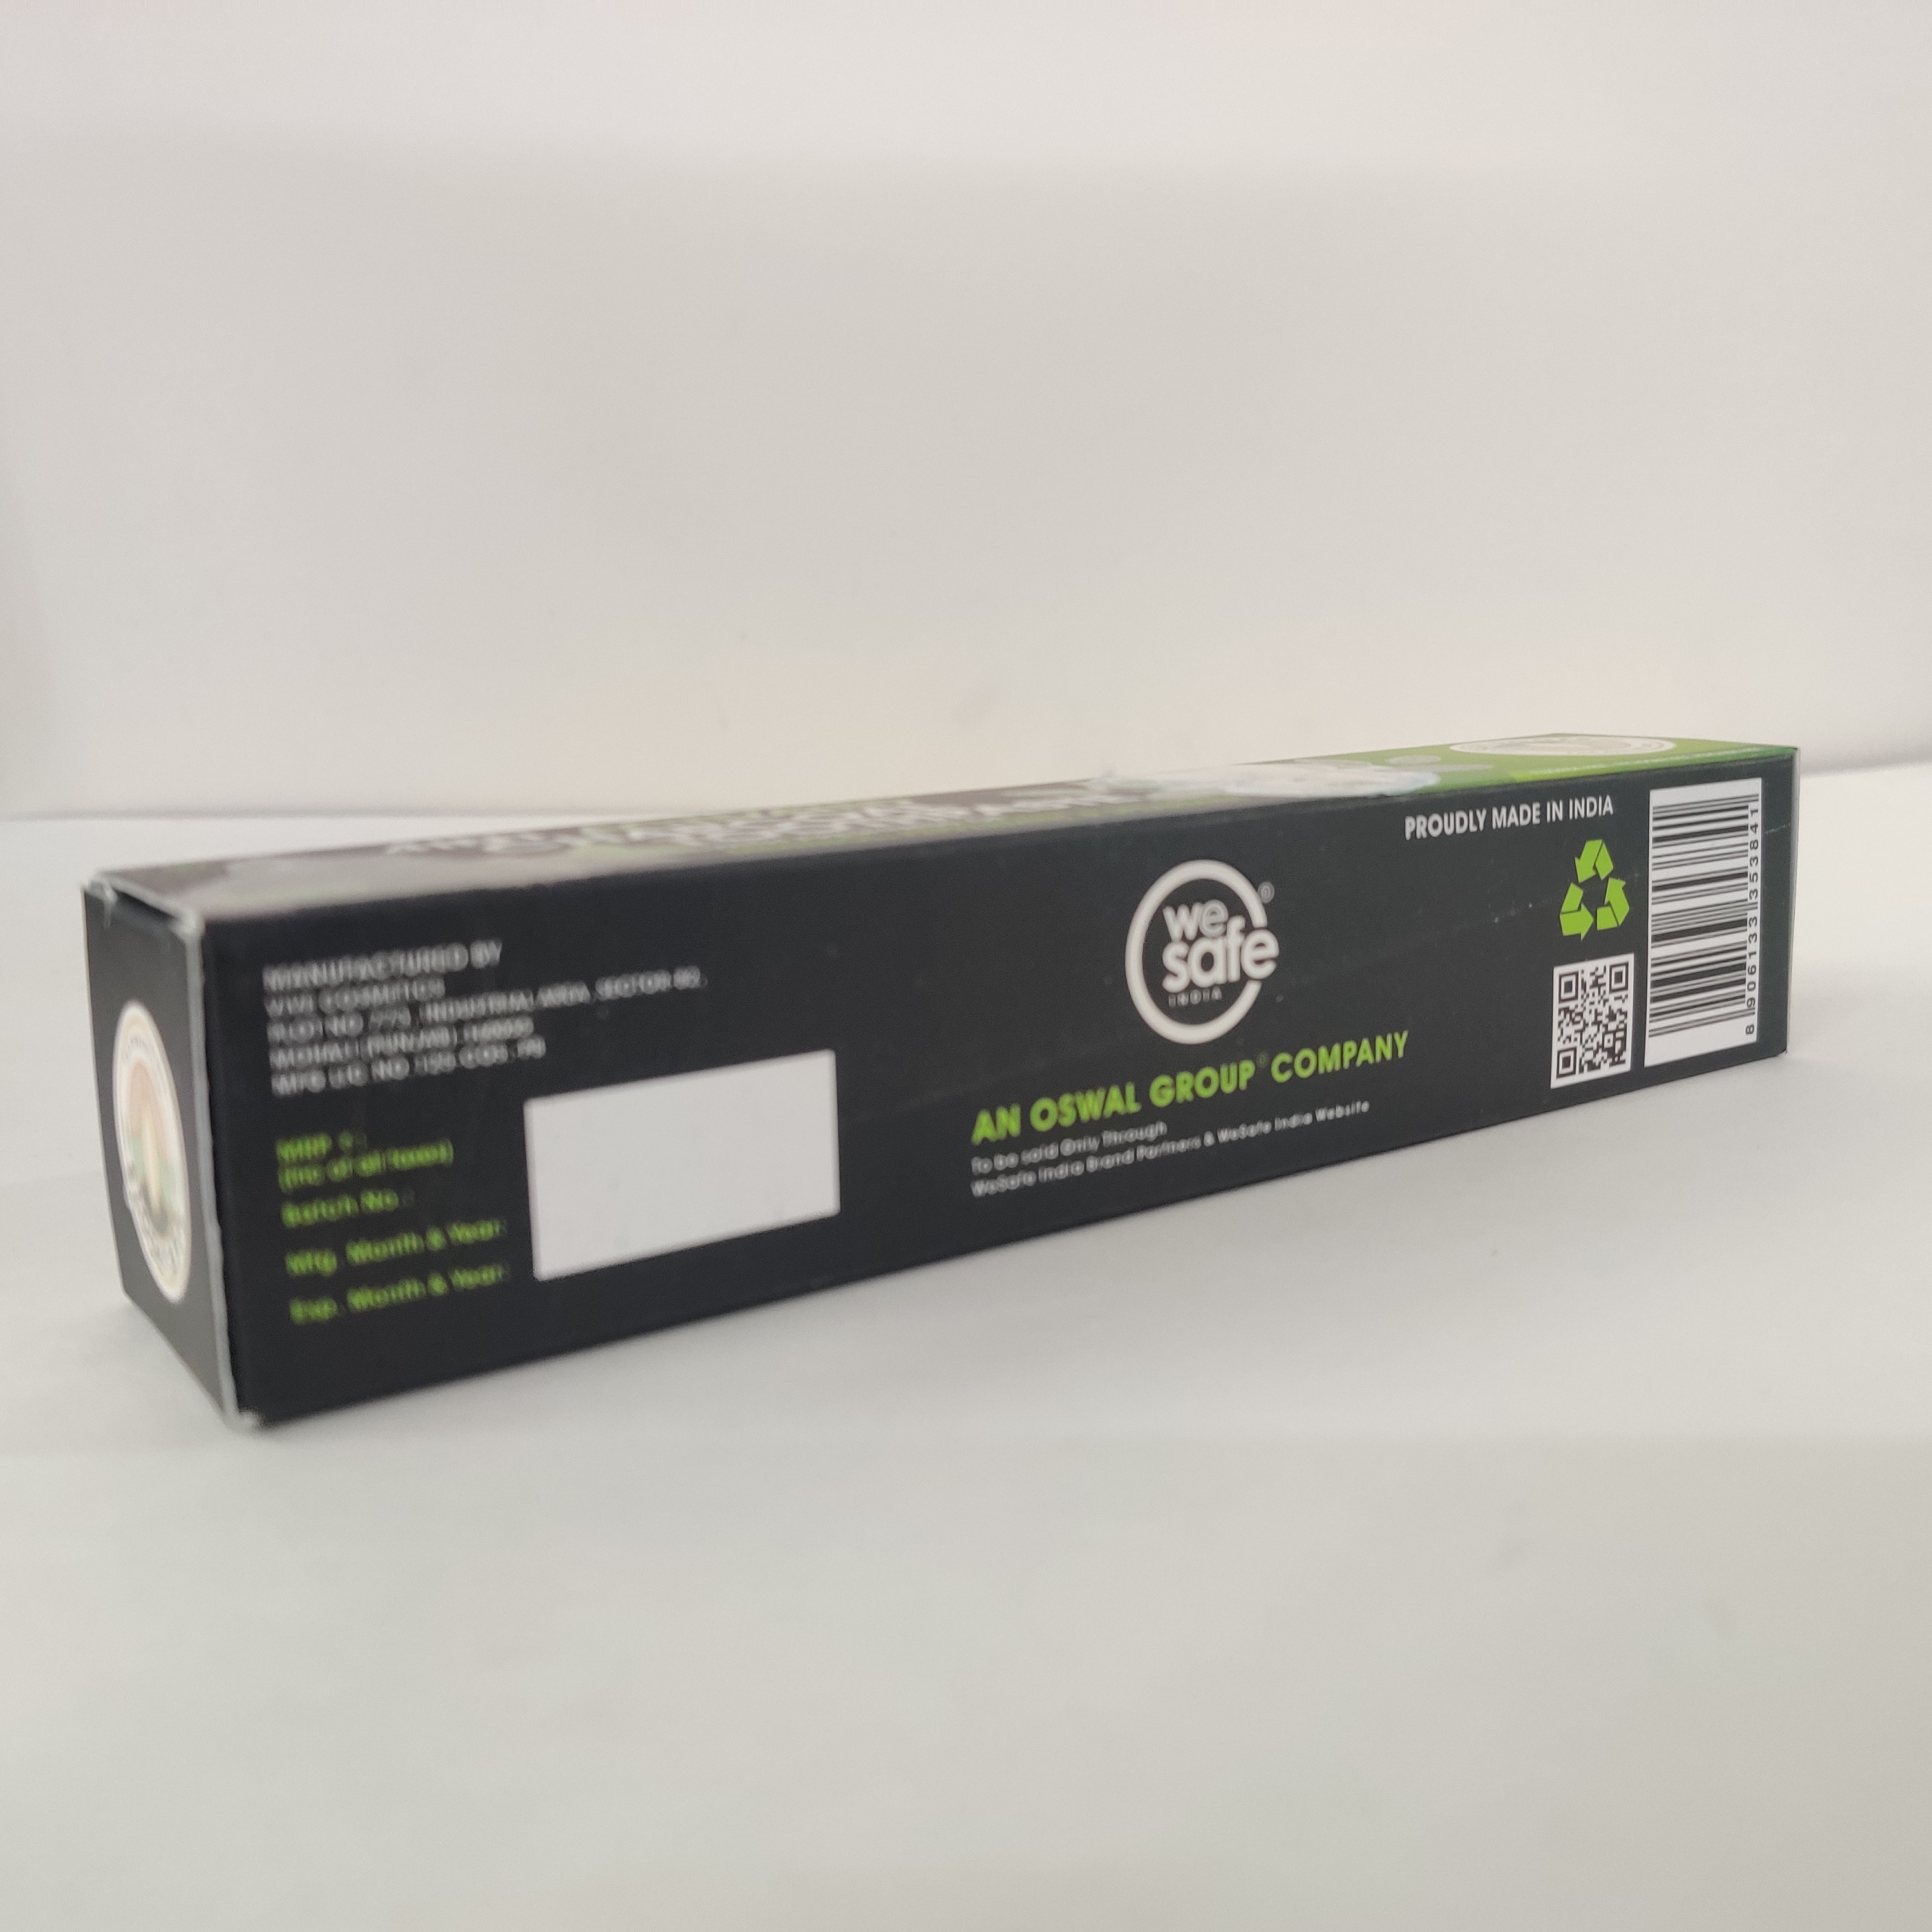 Toothpaste Mono Carton Packaging Box